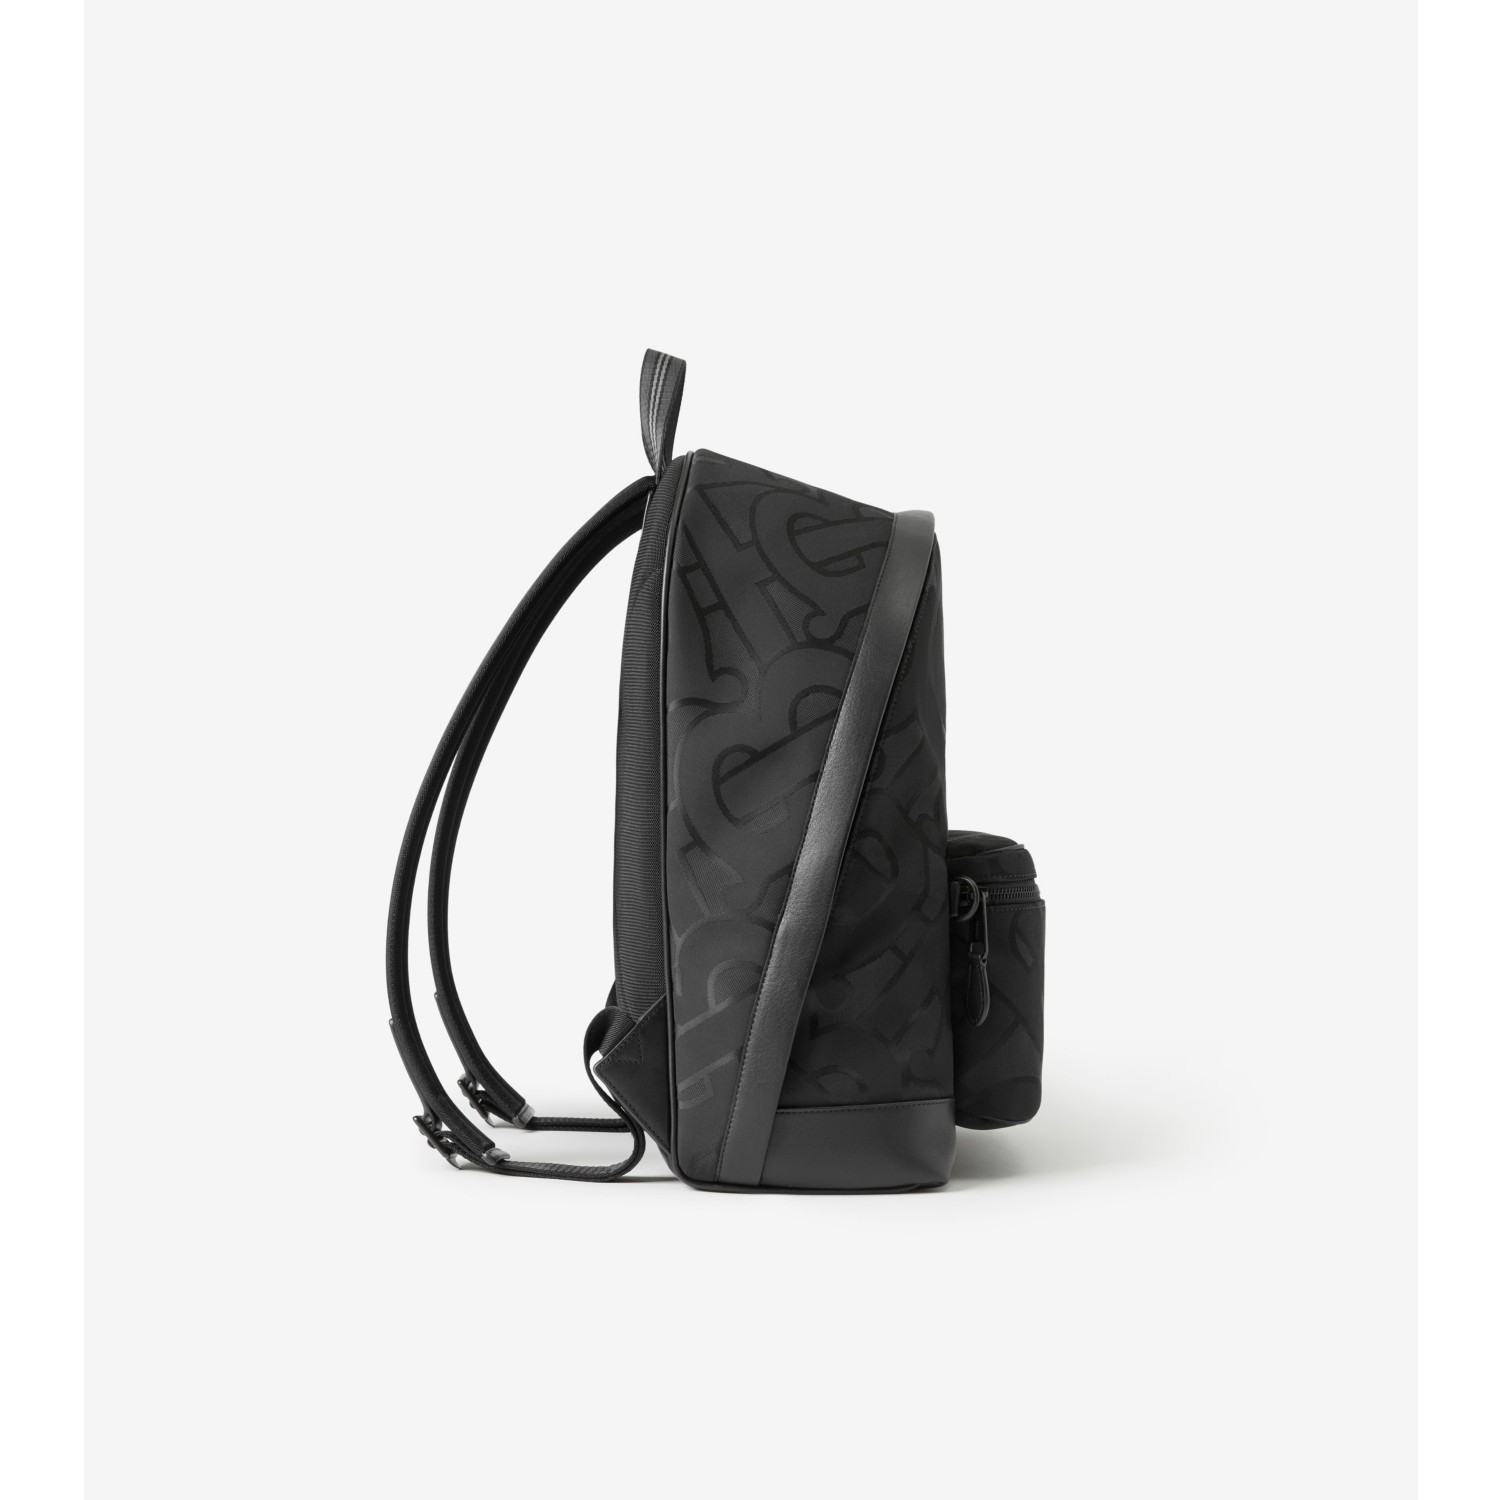 Backpacks Burberry - The Rucksack TB monogram small backpack - 8017168